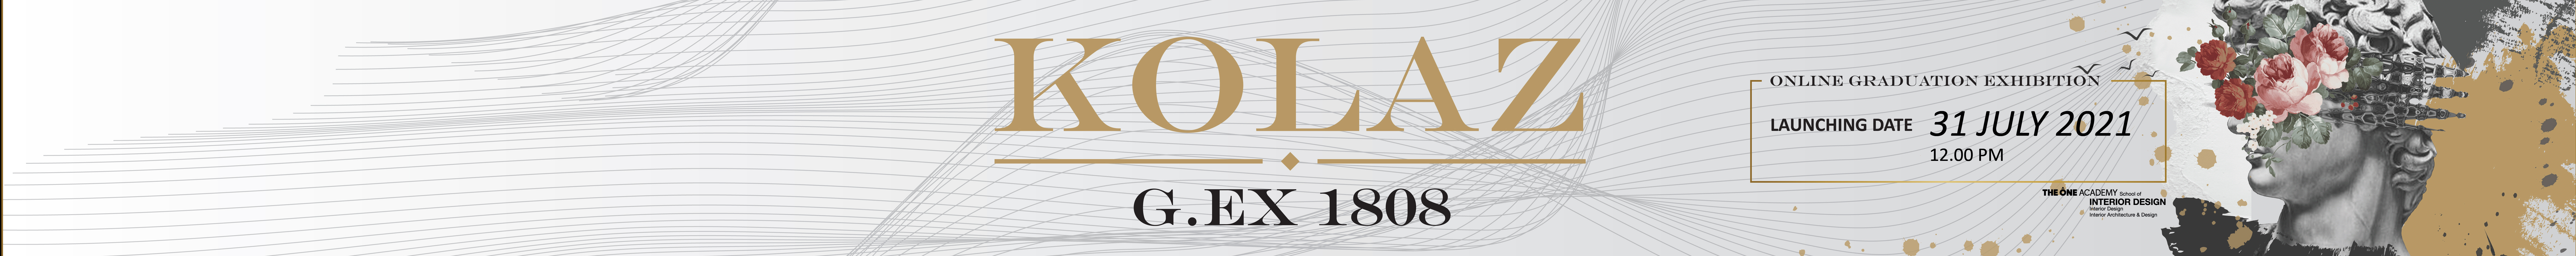 Kolaz G.EX1808's profile banner